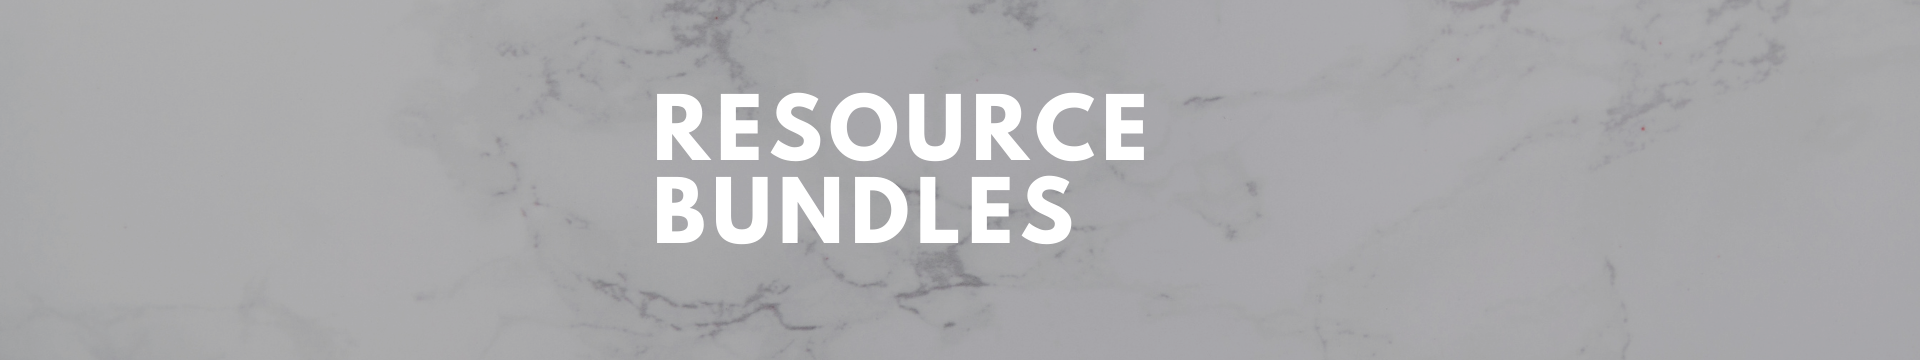 resource bundles